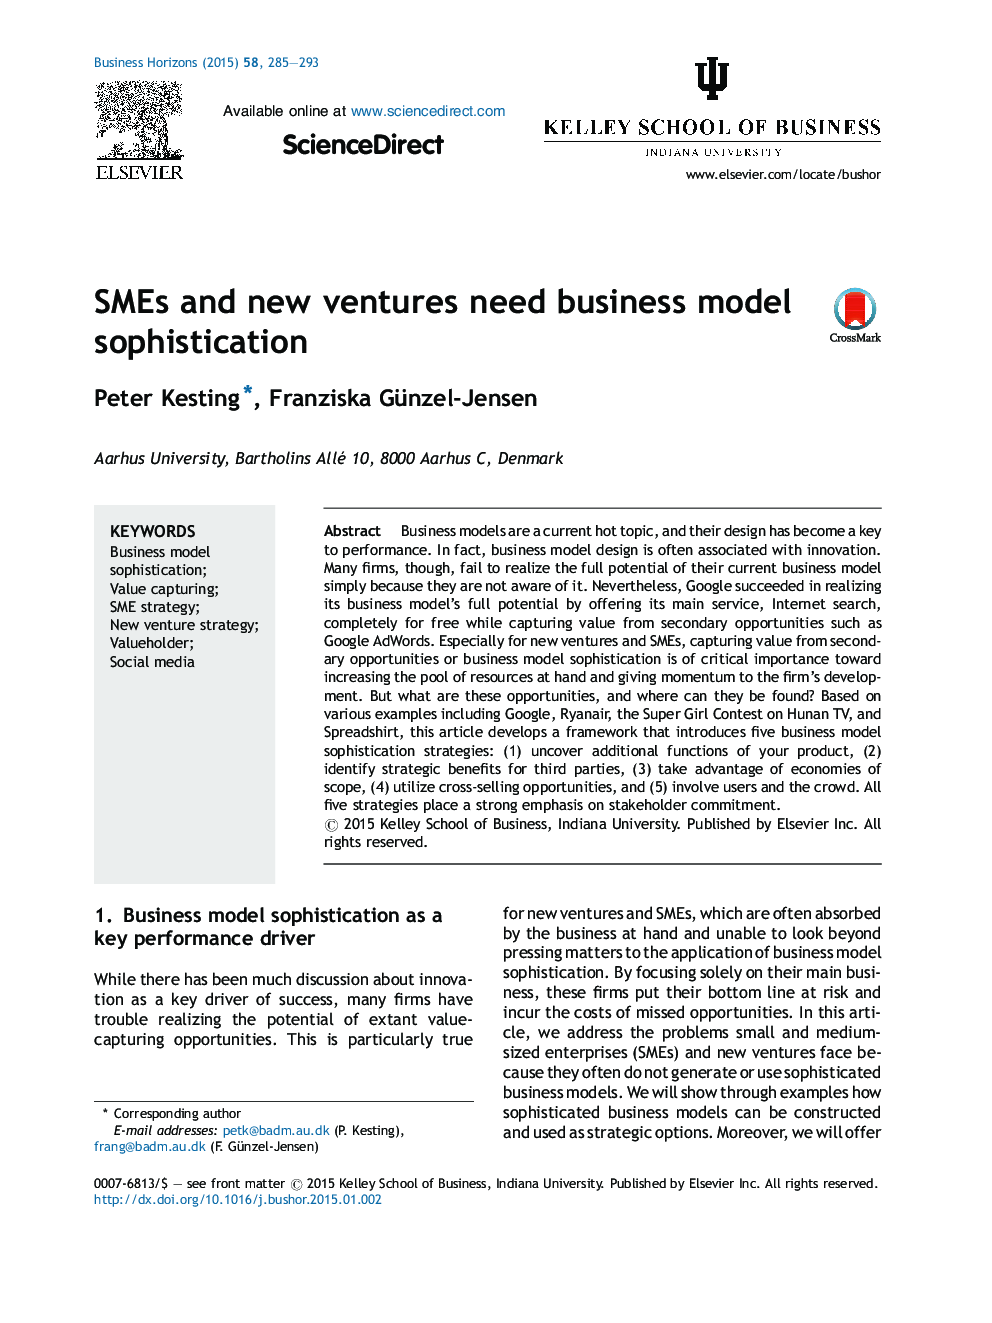 SME ها و سرمایه گذاری های جدید نیاز به پیچیدگی مدل کسب و کار دارند